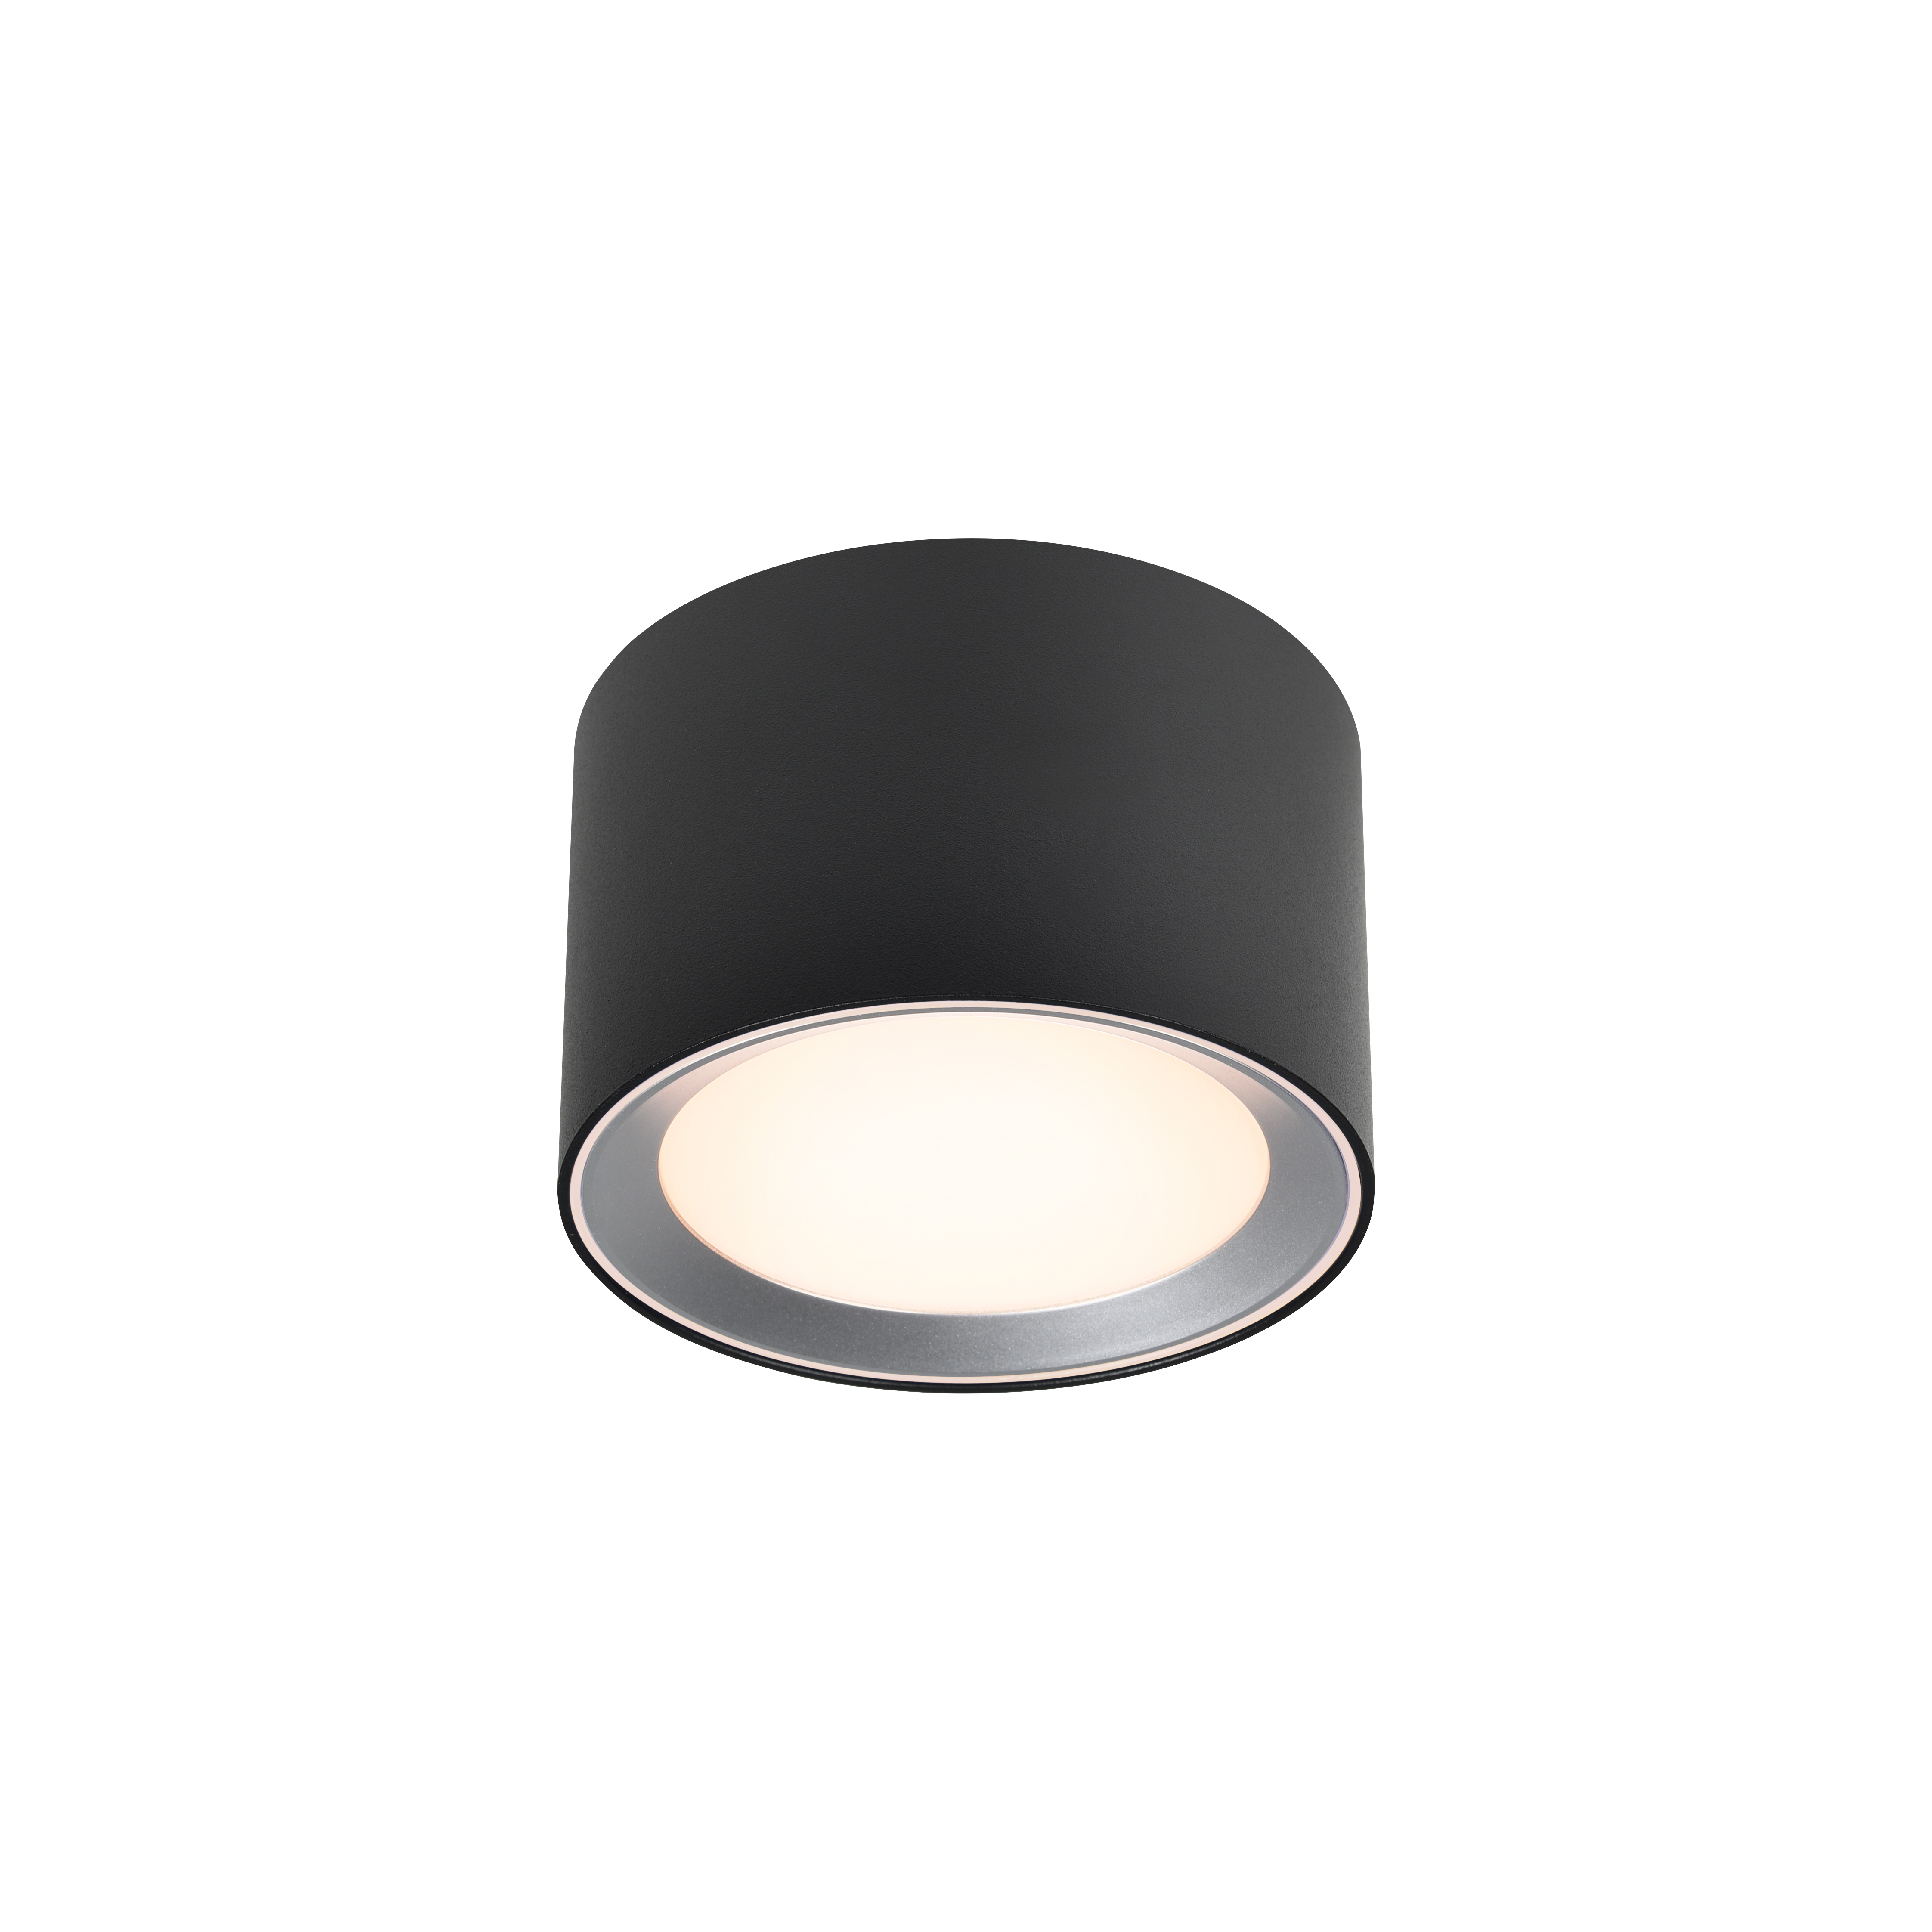 Landon Smart | Ceiling light | Black